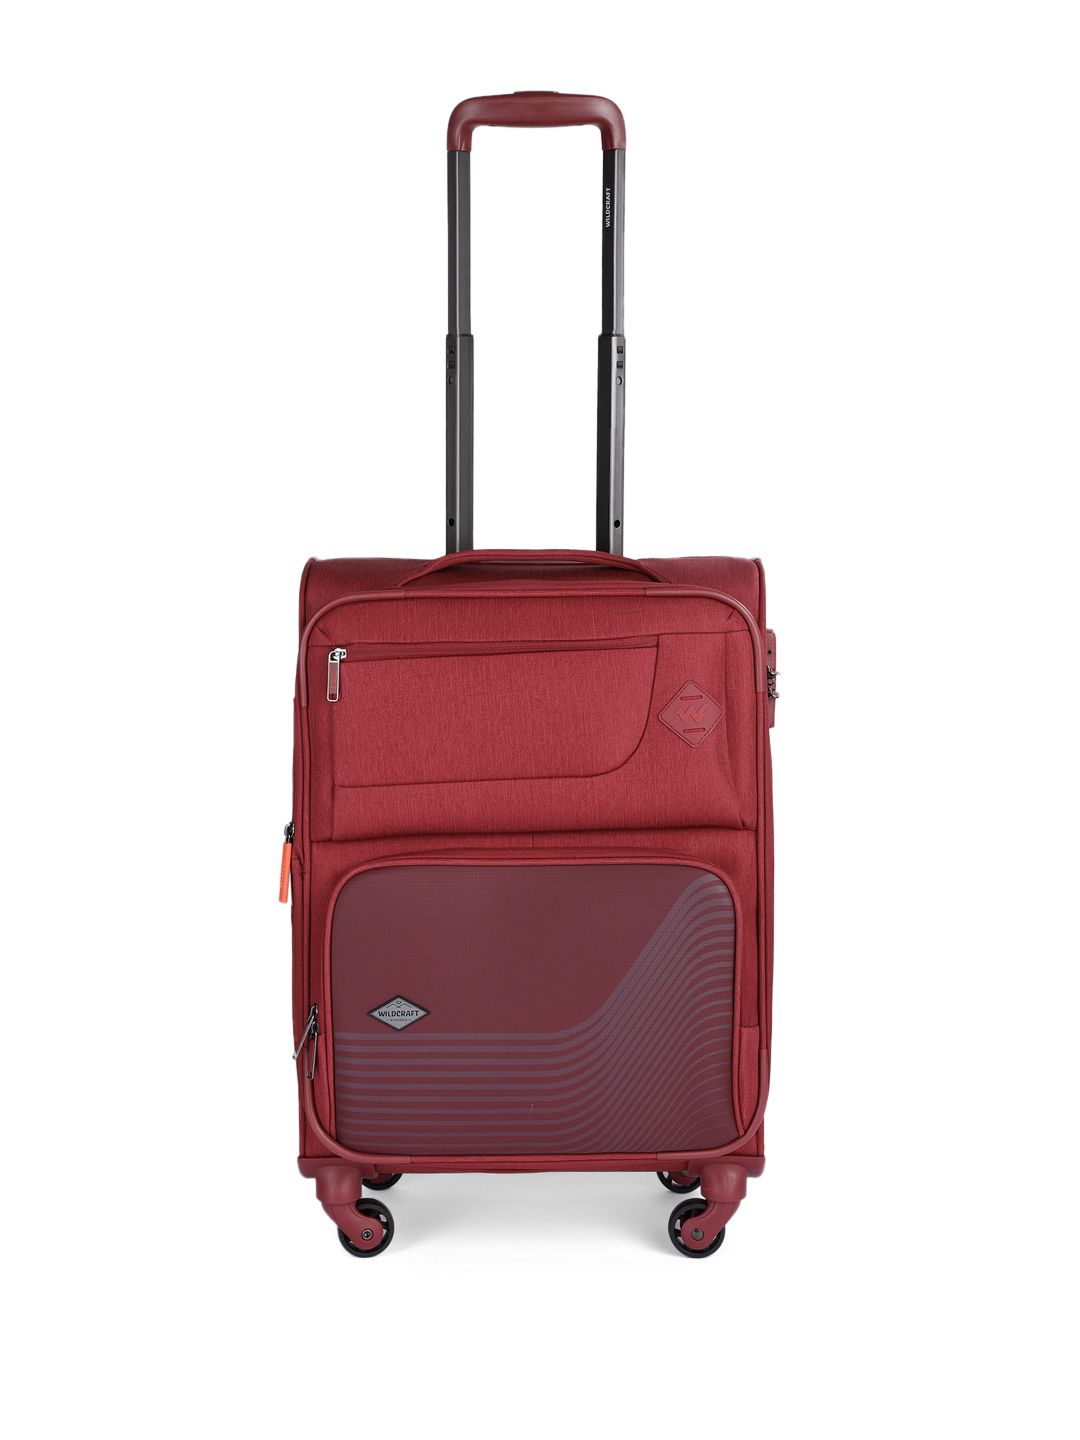 Wildcraft Maroon Rigel Plus Cabin Trolley Suitcase Price in India